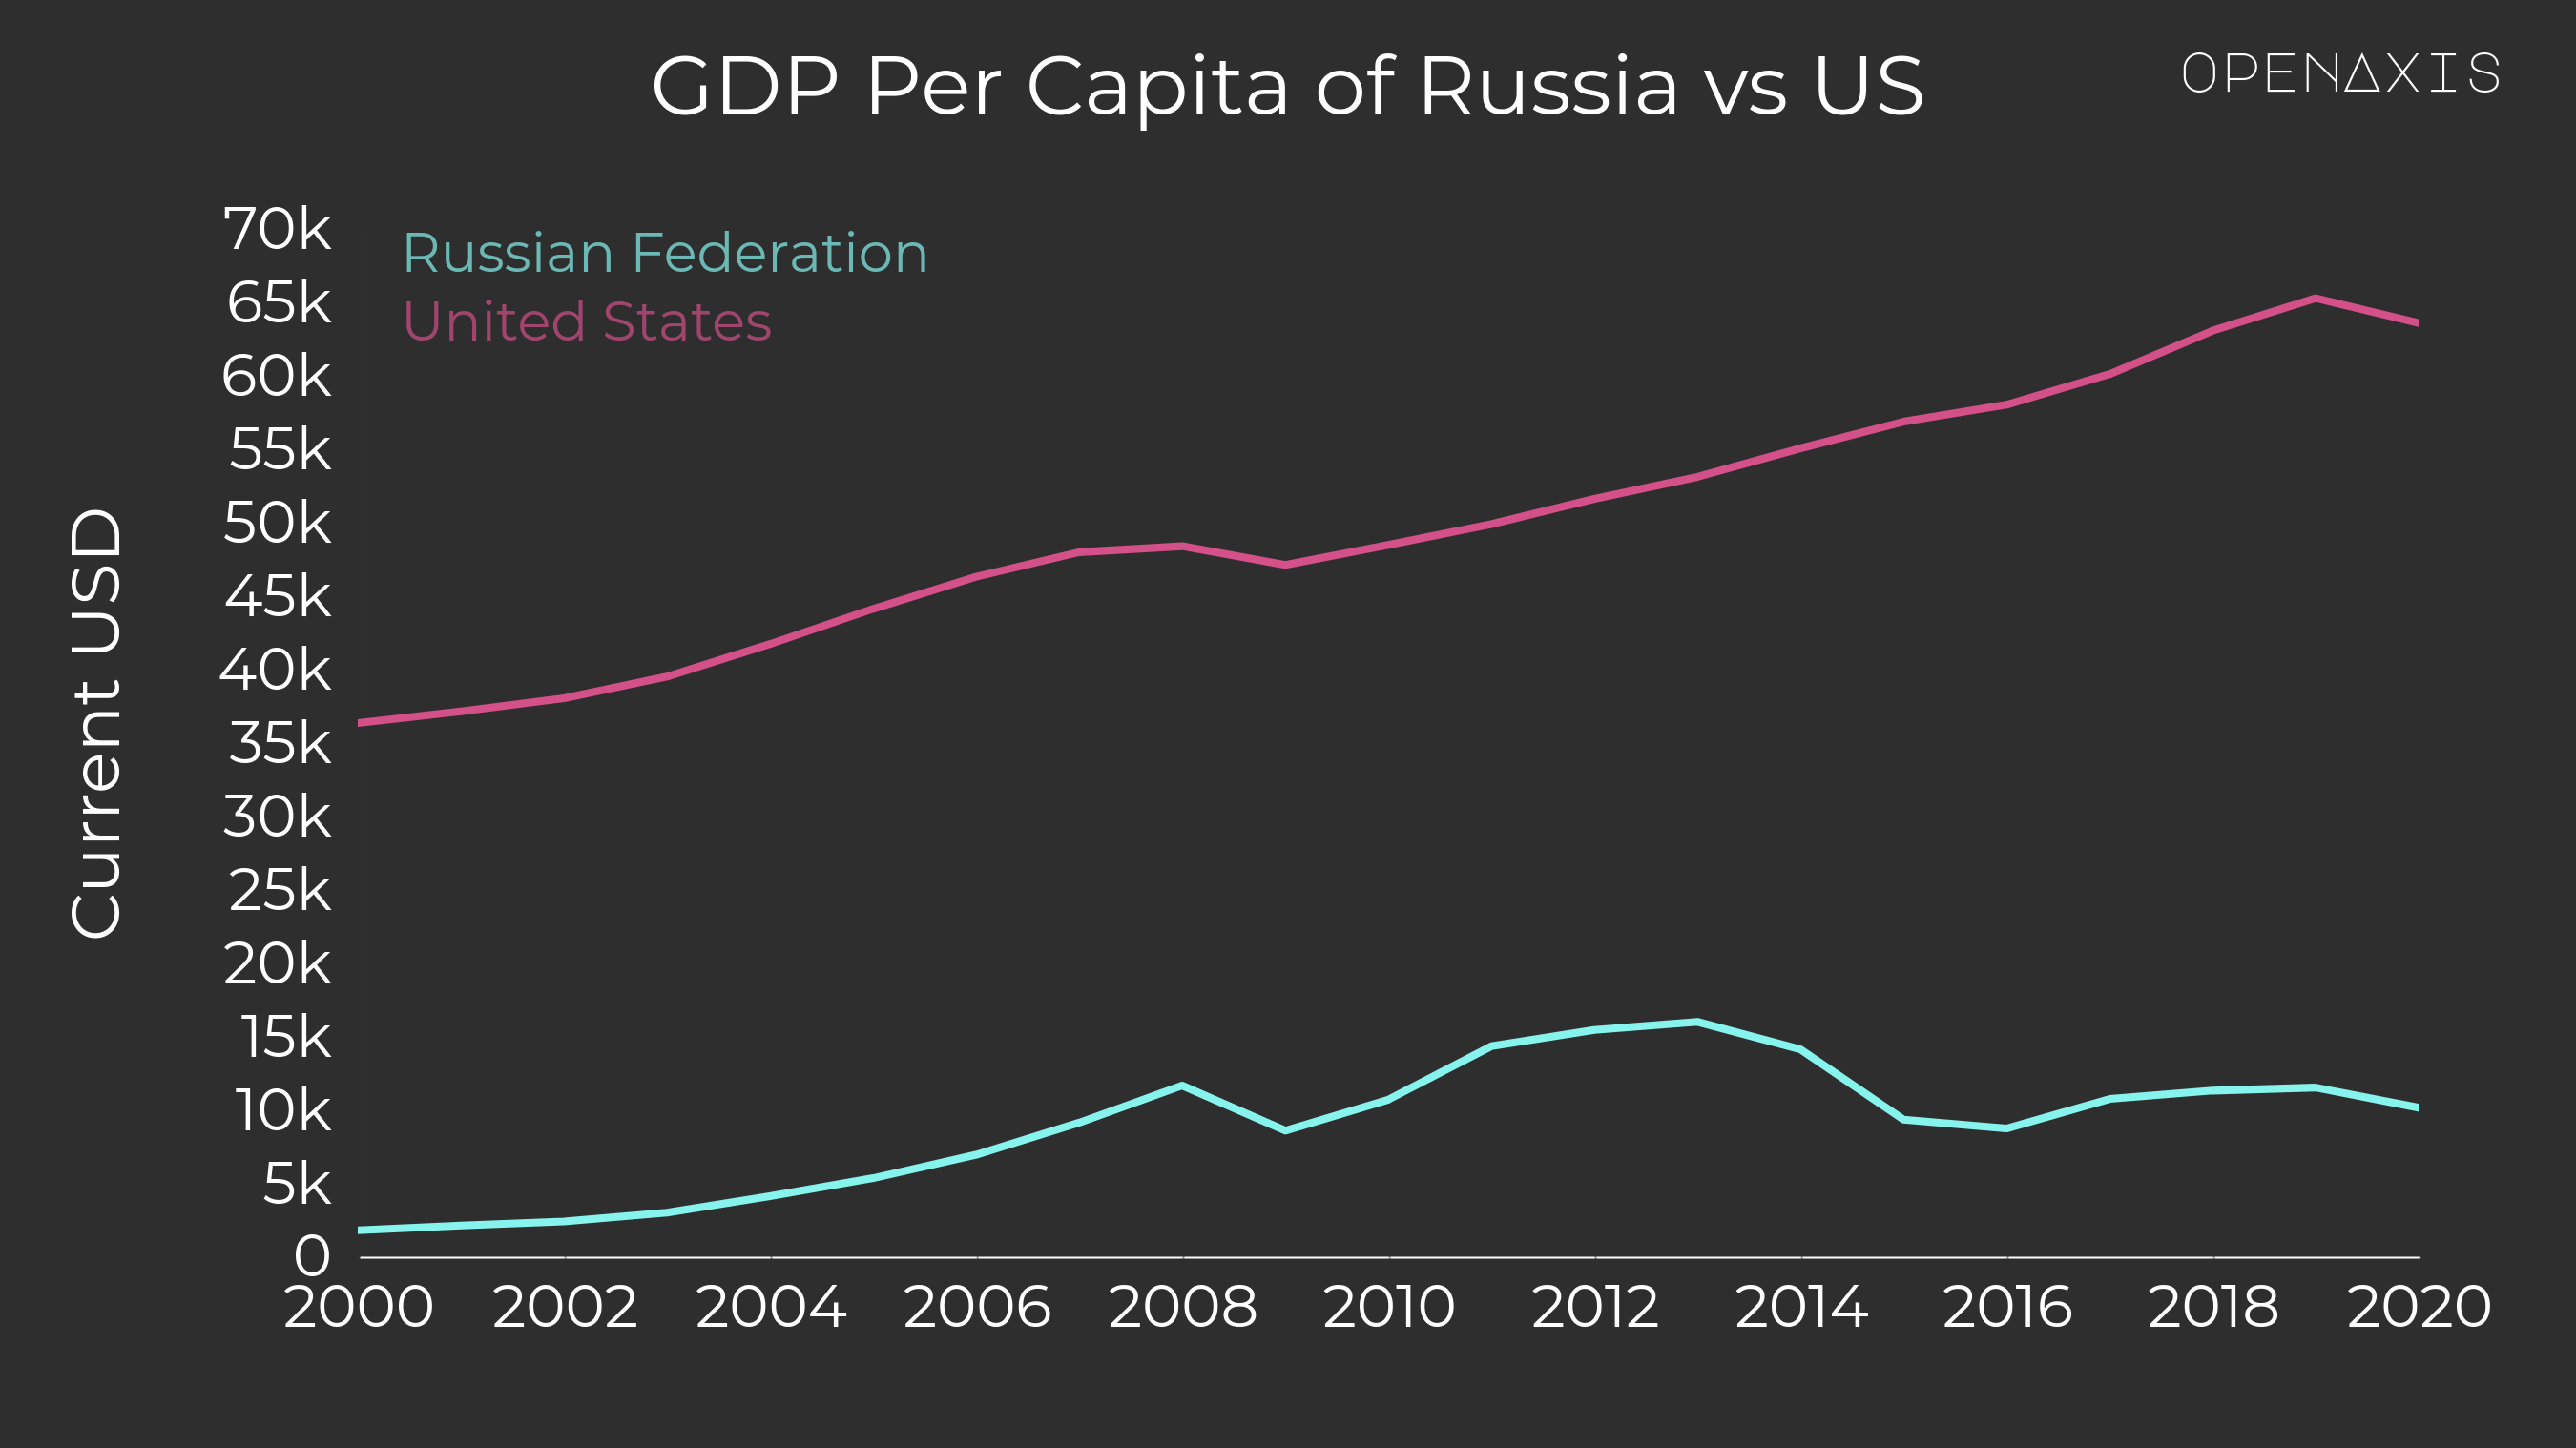 "GDP Per Capita of Russia vs US"